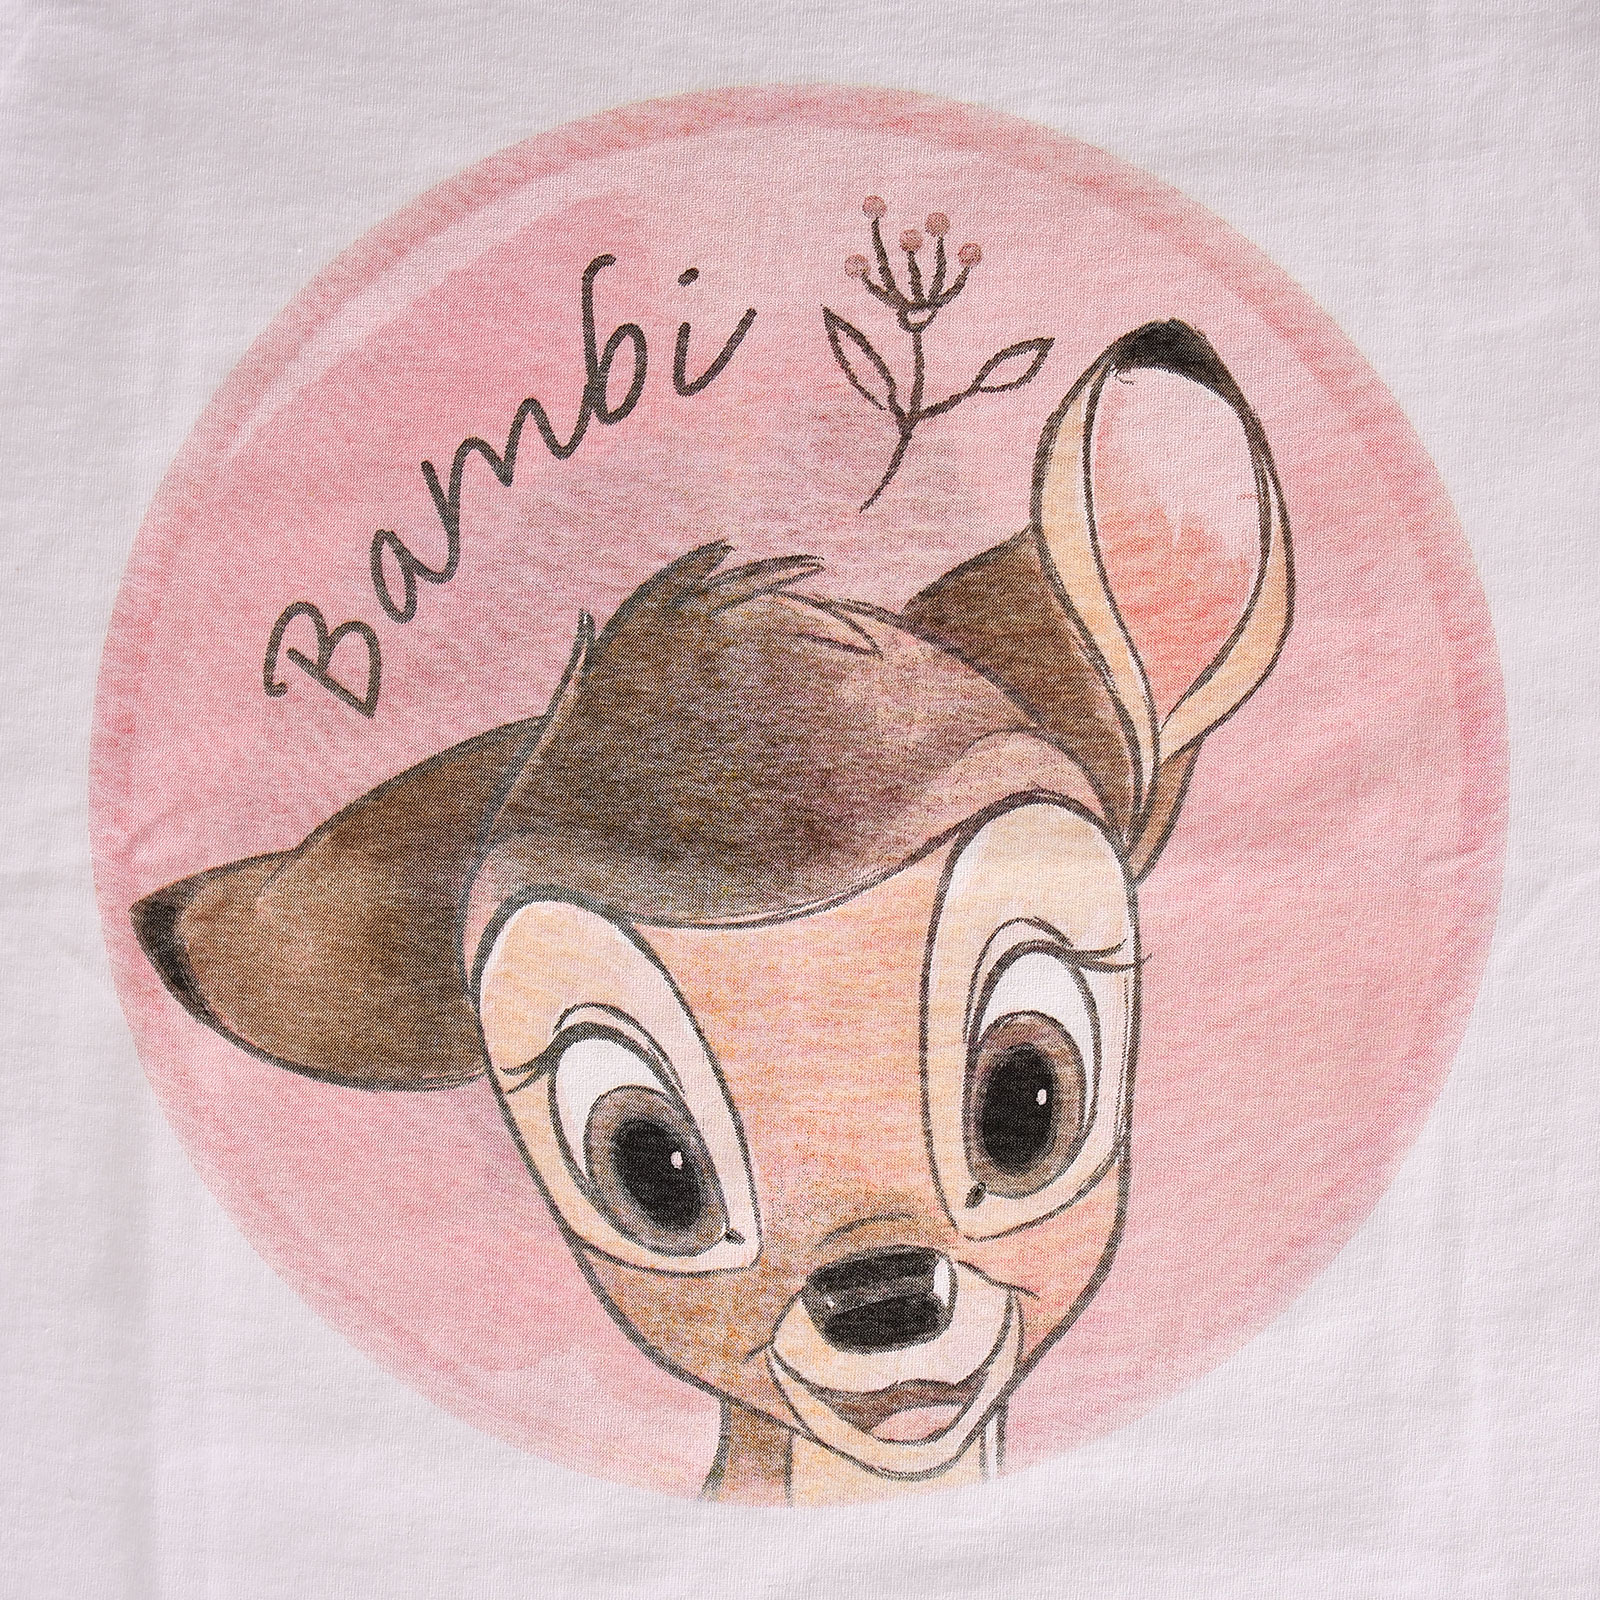 Bambi T-shirt Dames wit